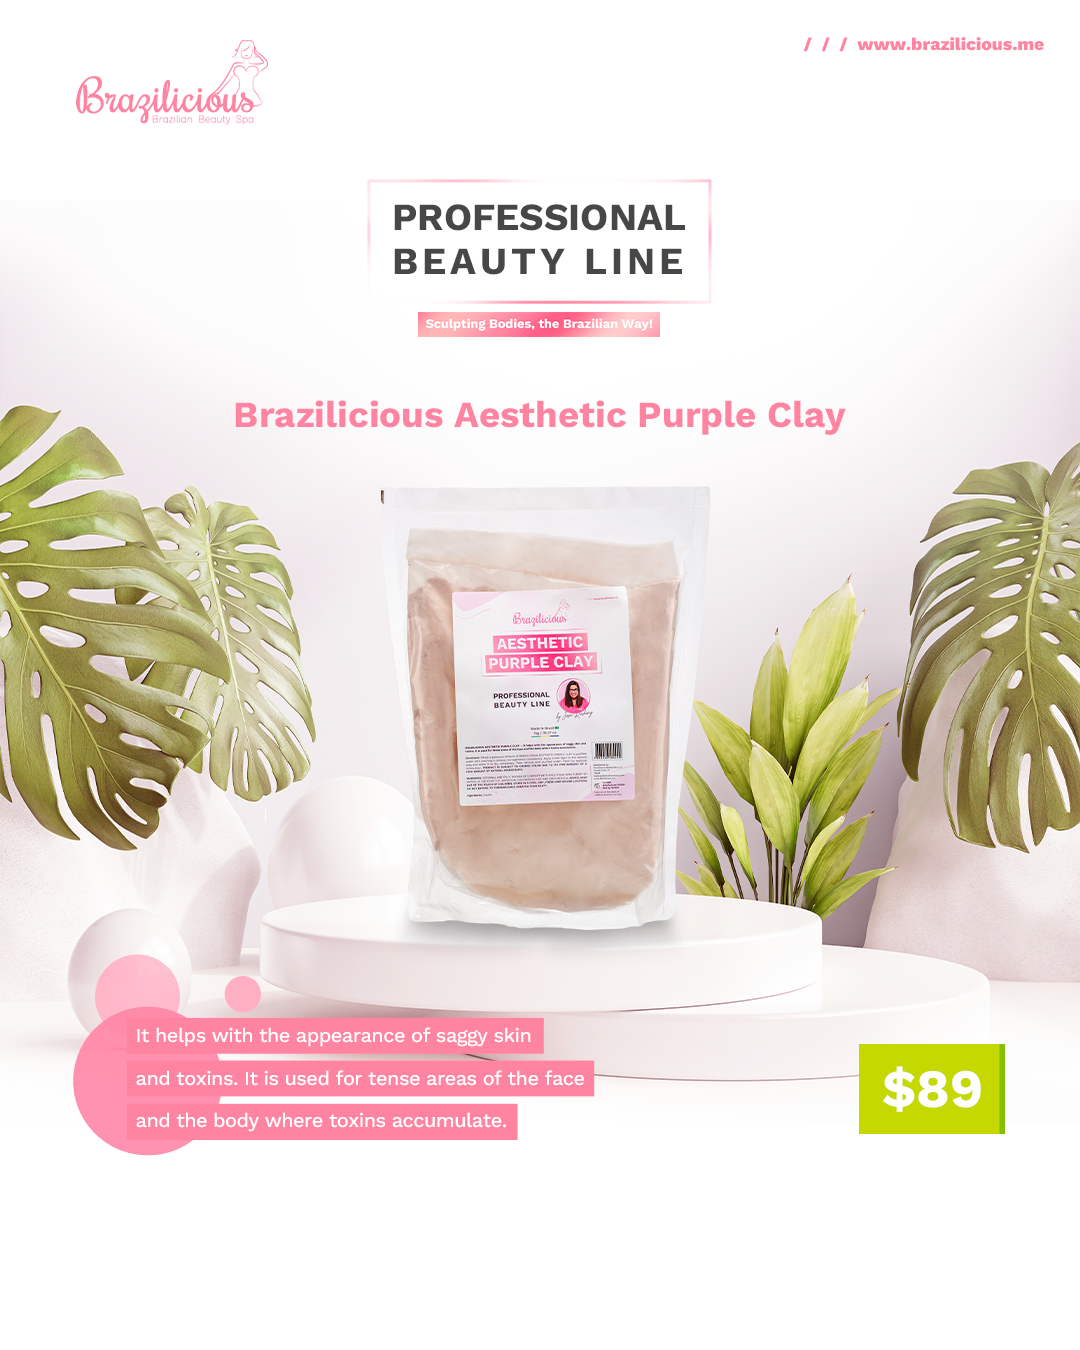 Brazilicious Aesthetic Purple Clay